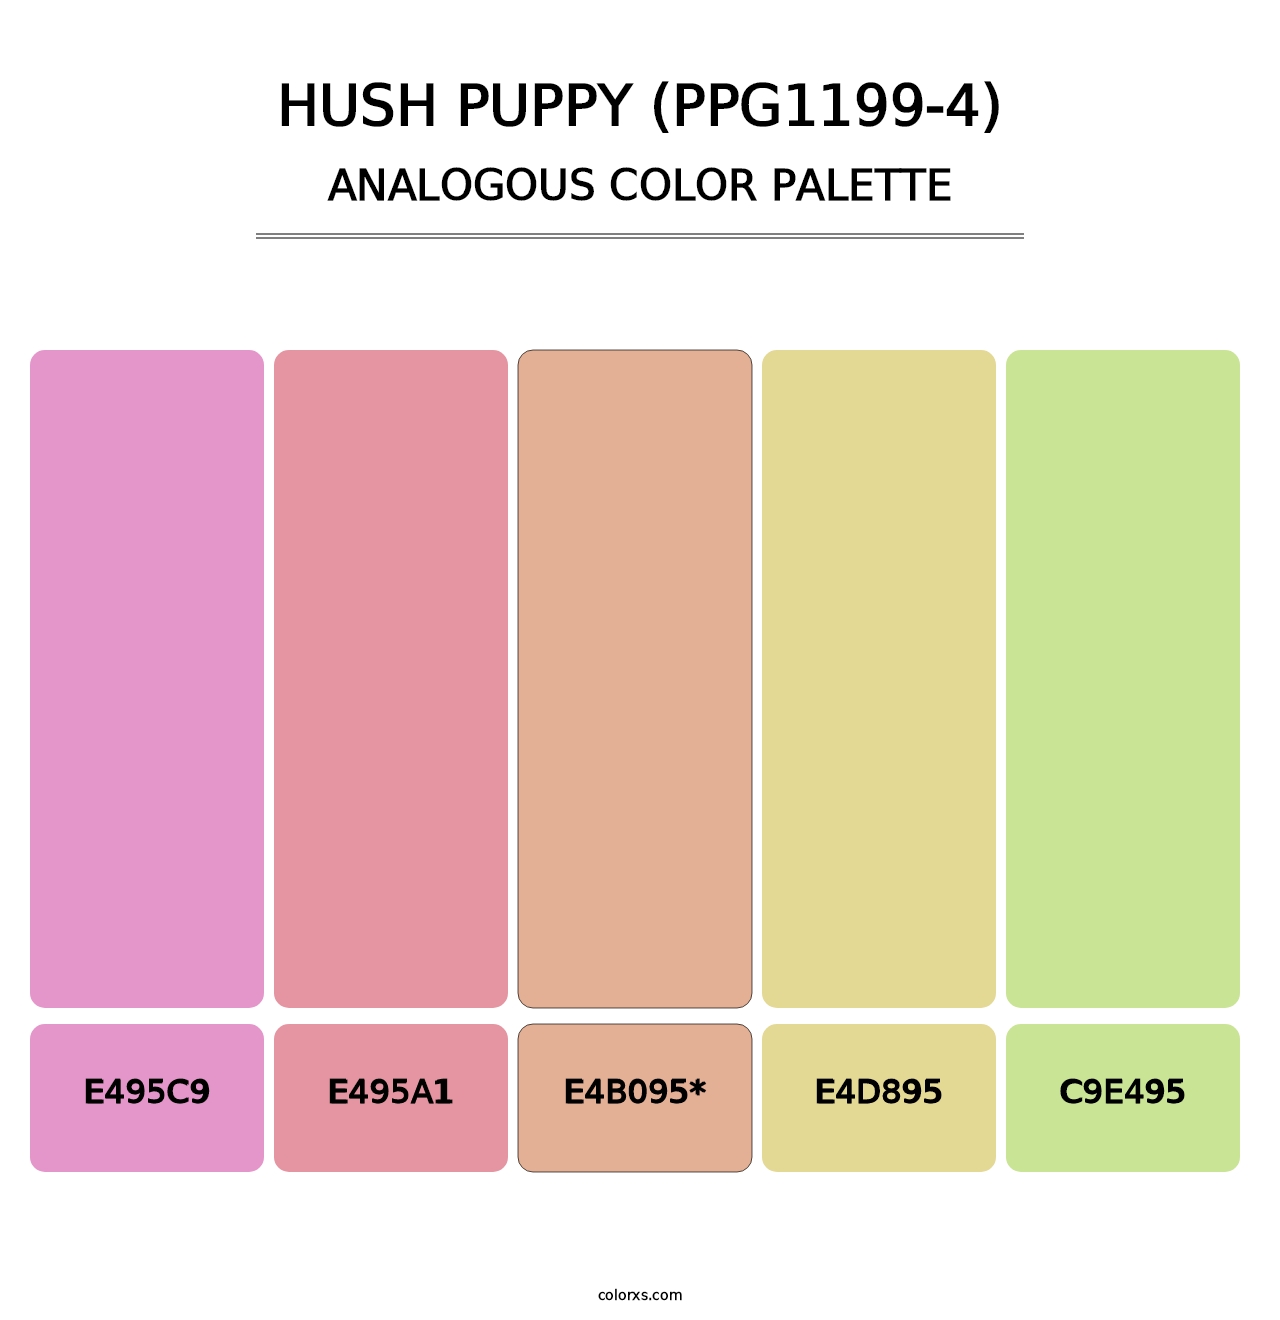 Hush Puppy (PPG1199-4) - Analogous Color Palette